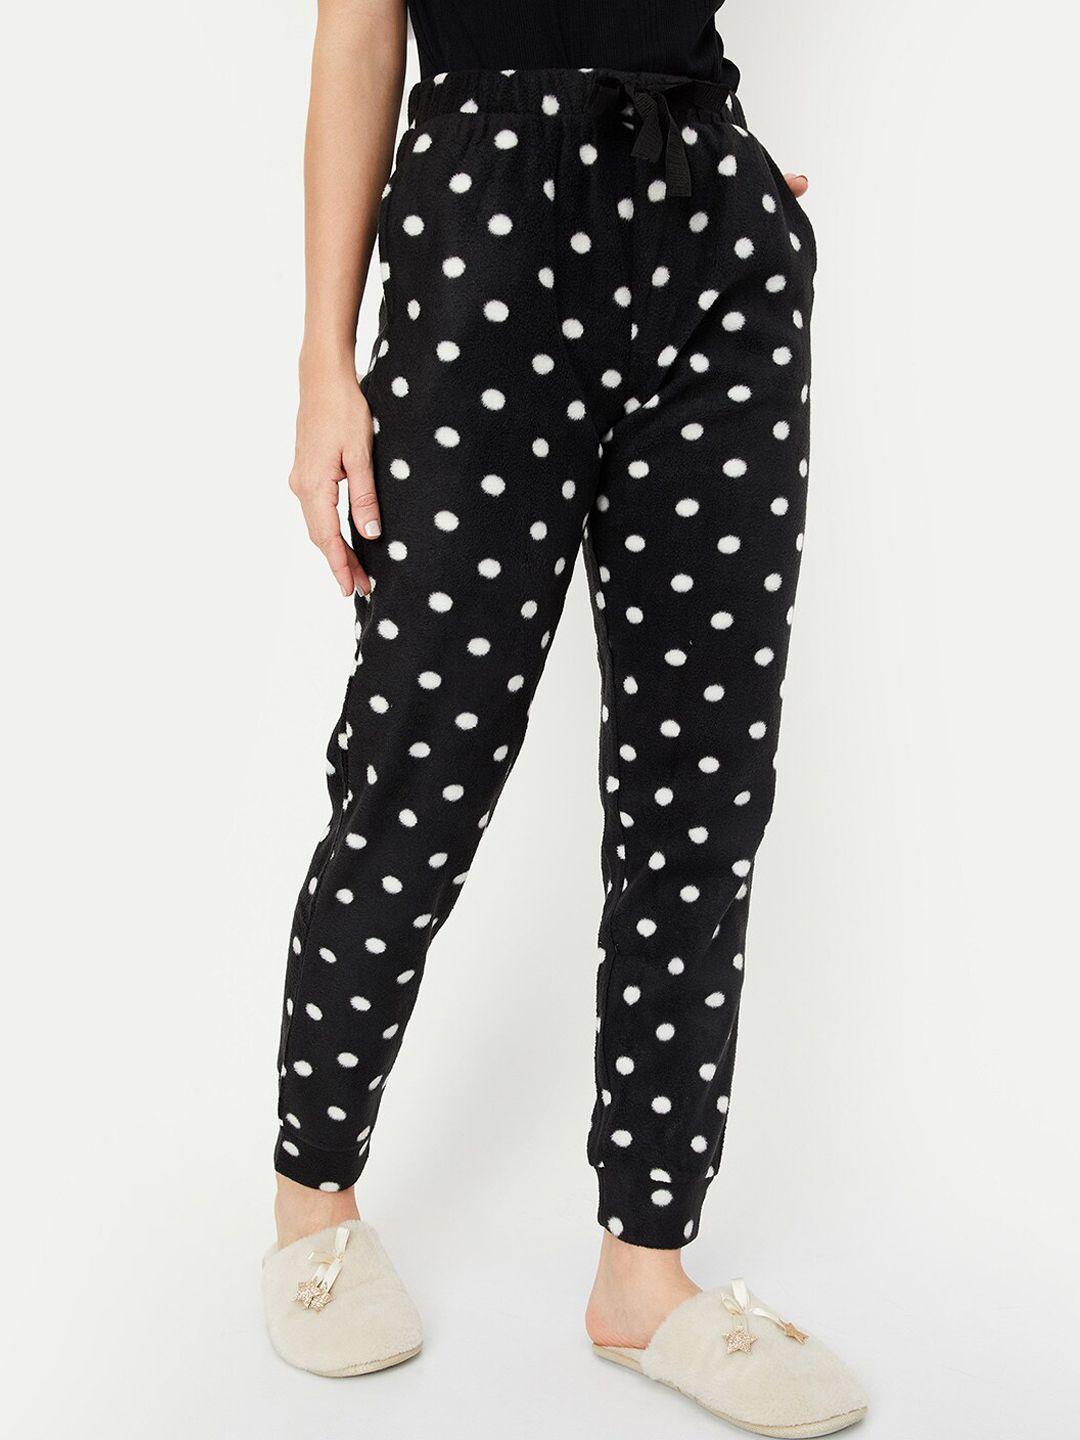 max women polka dots printed mid rise lounge pant